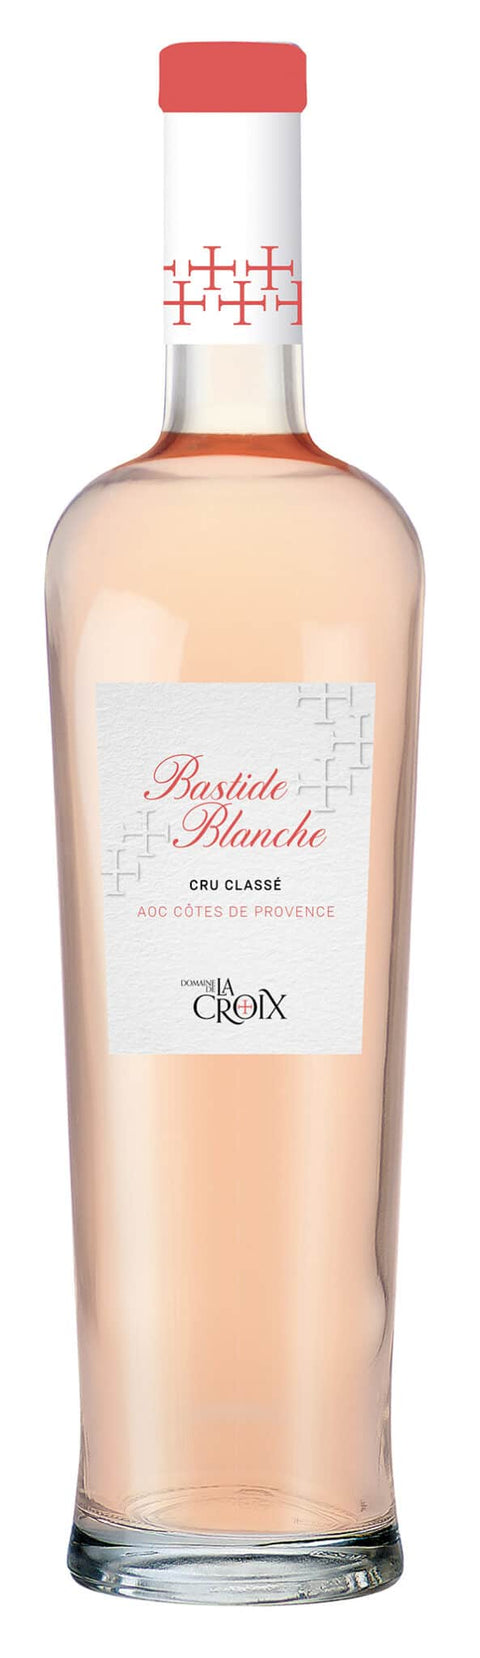 Bastide Blanche Rosé, Côtes de Provence Cru Classé 2021